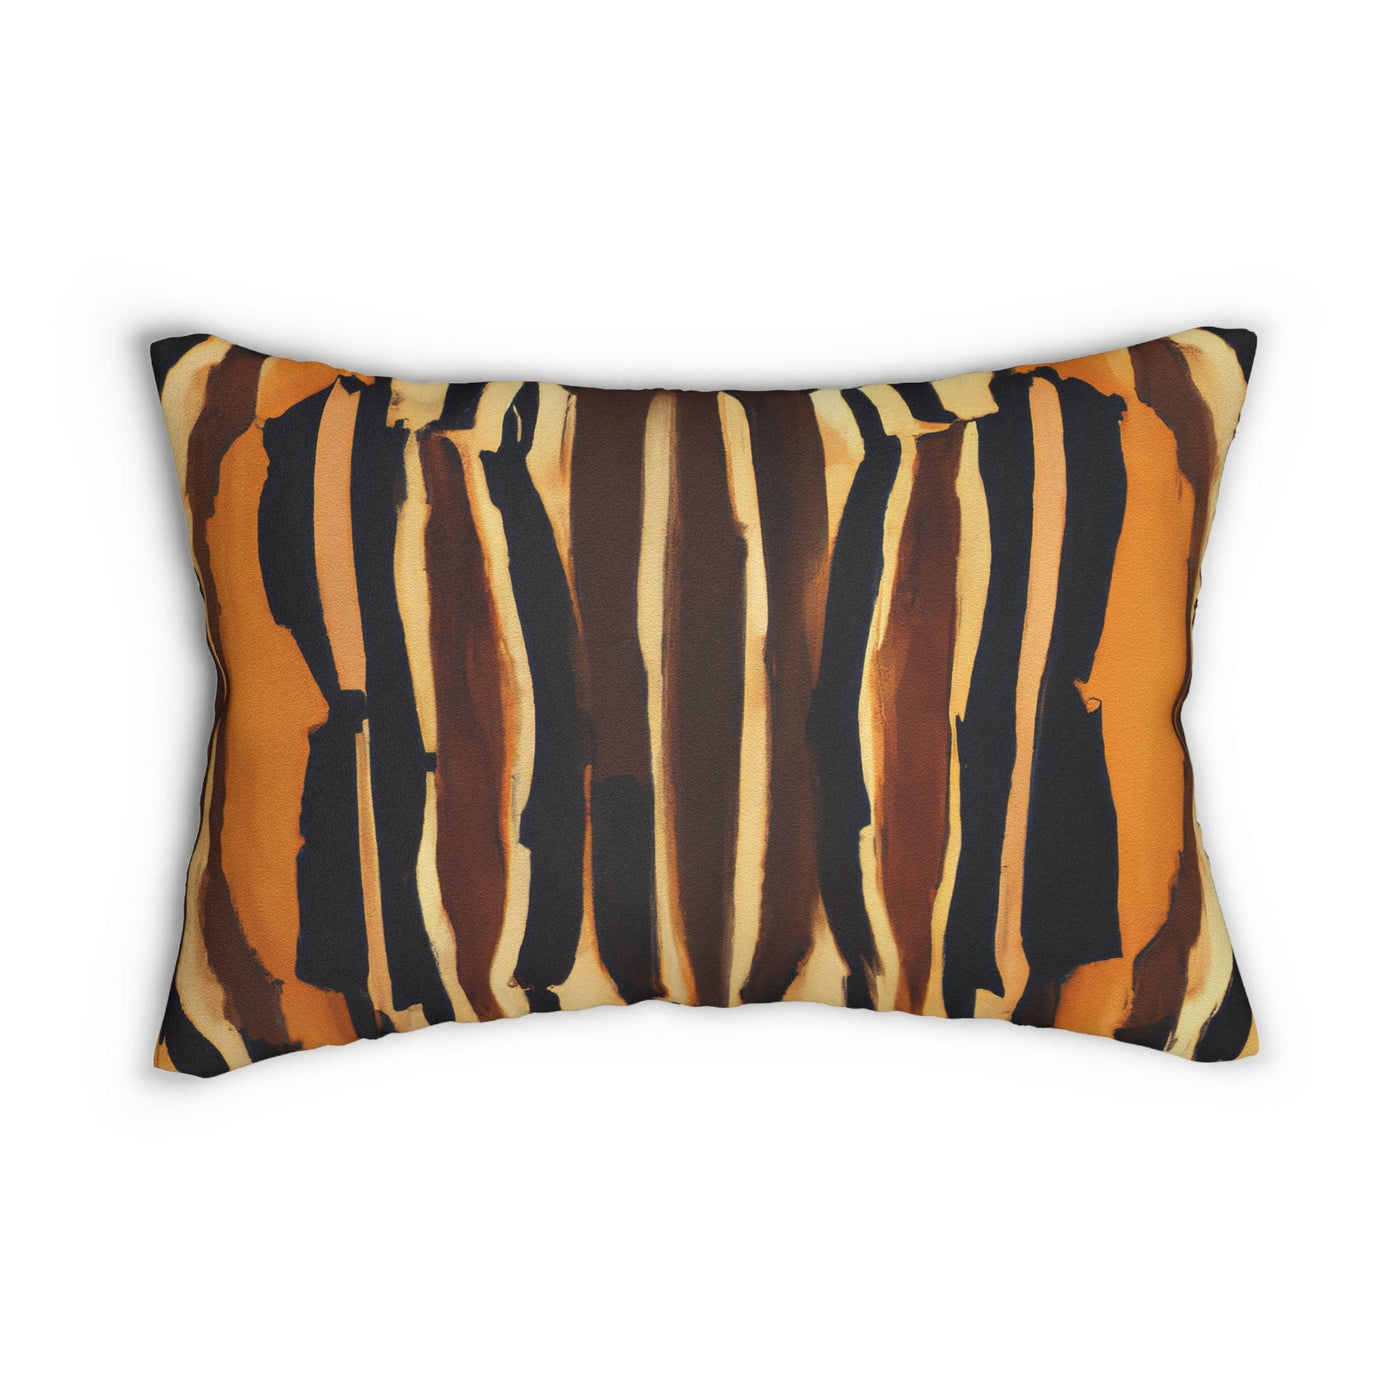 Decorative Lumbar Throw Pillow - Zorse Geometric Print Pattern - Home Decor